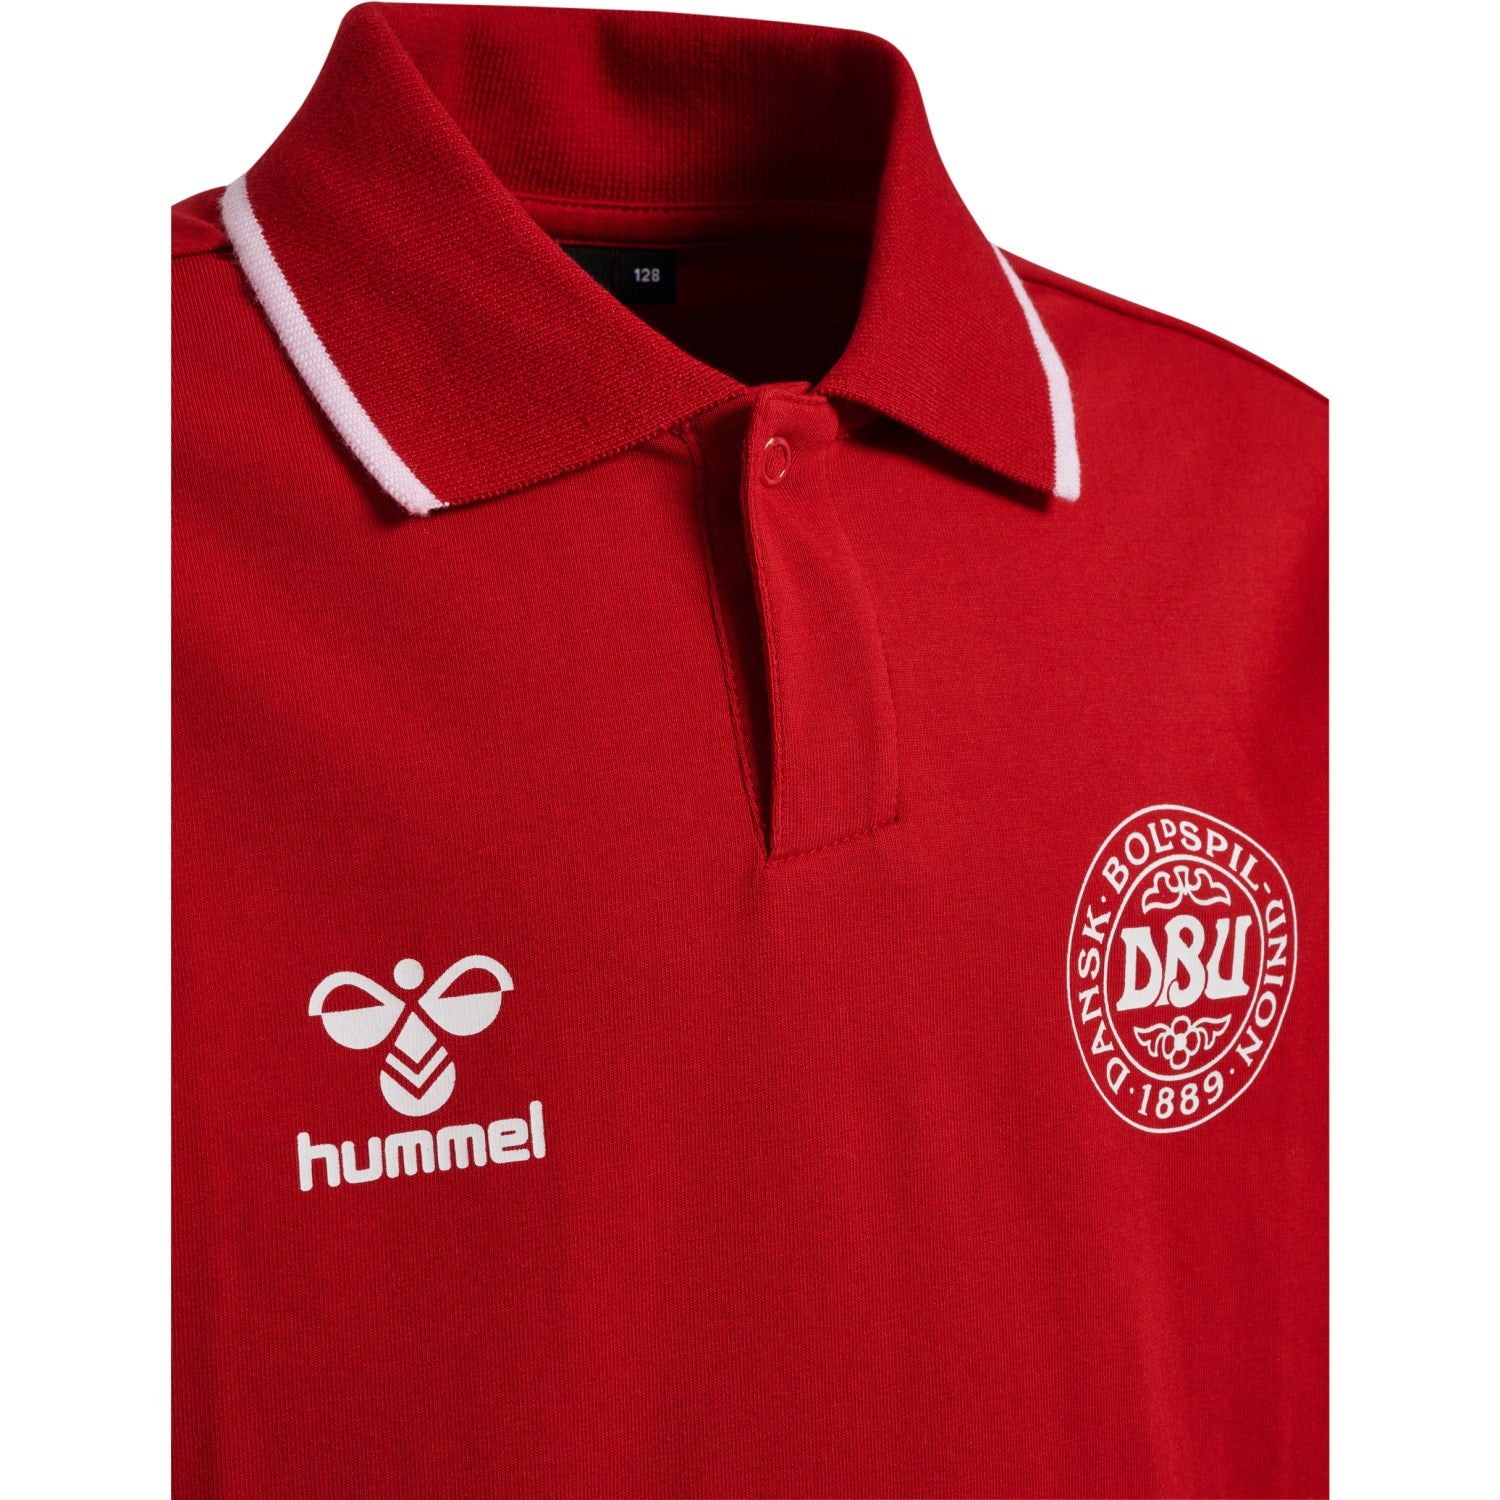 Hummel Chili Pepper DBU Gameday Polo T-Shirt 4